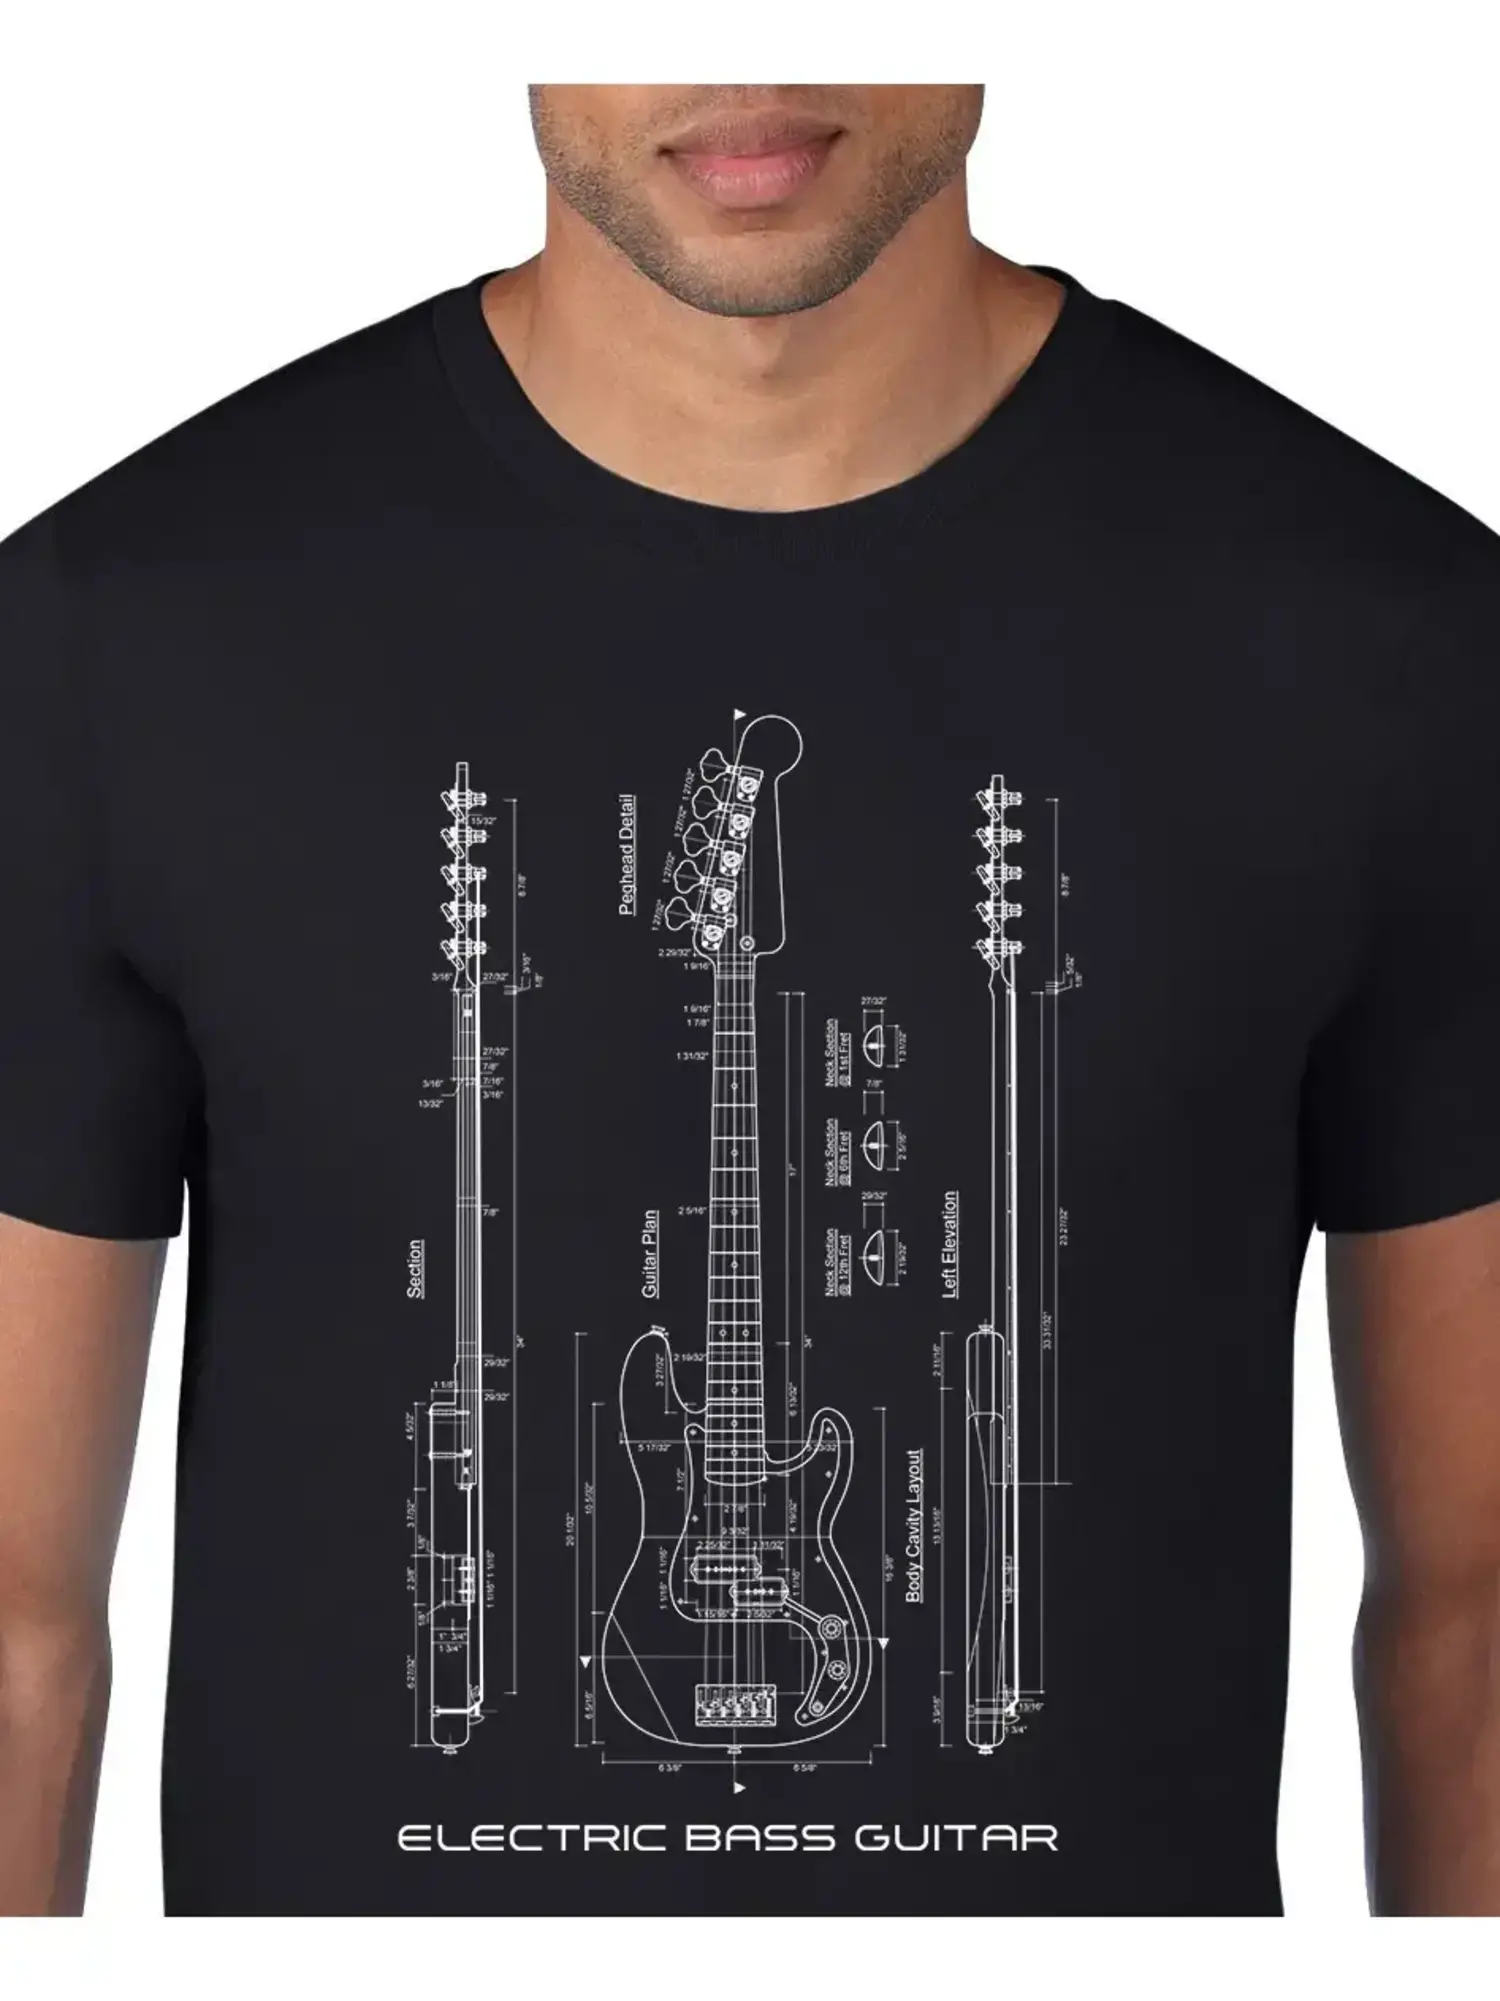 Black Bass Guitar Shirt  No Rules Fashion - No Rules Fashion